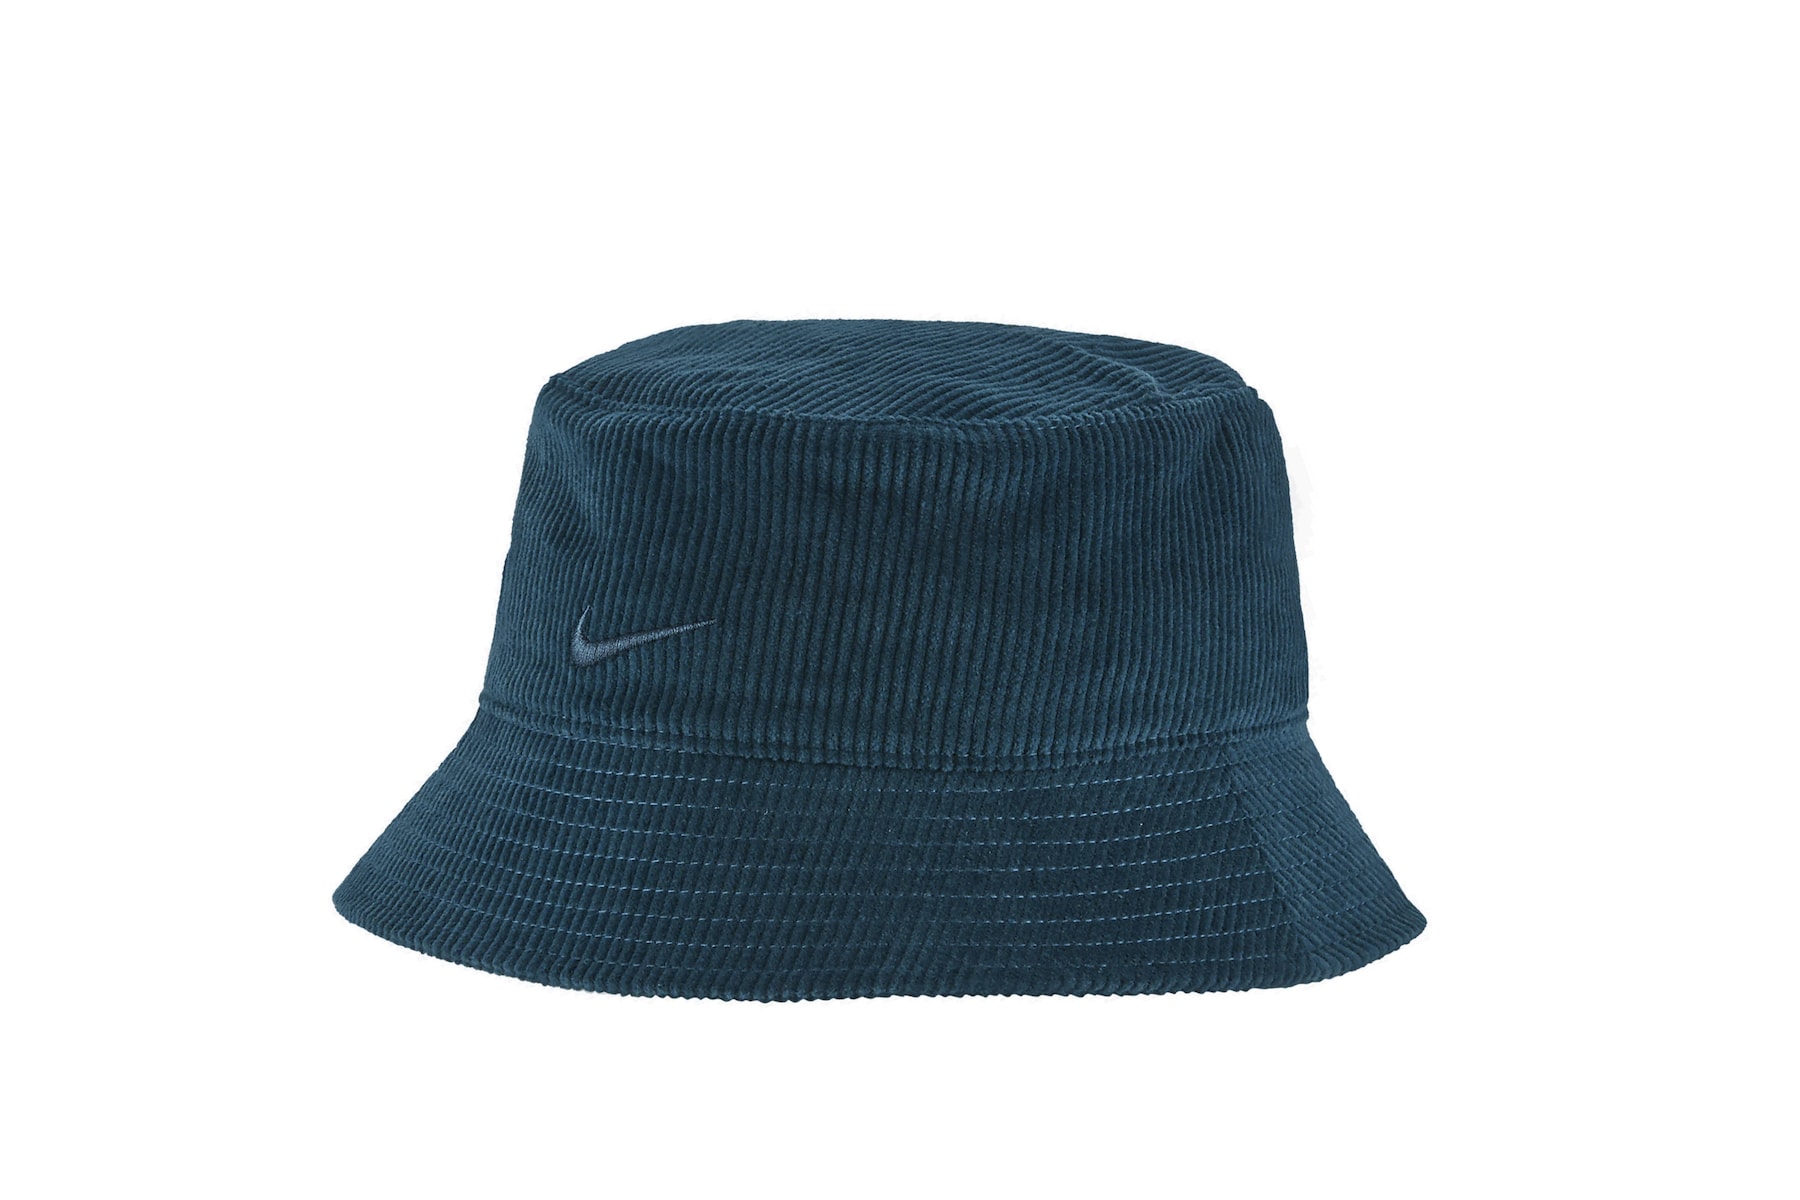 Nike Logo Bucket Hat Corduroy Black Blue Swoosh Fashion Trend Accessory Fall Cozy Girl Style 